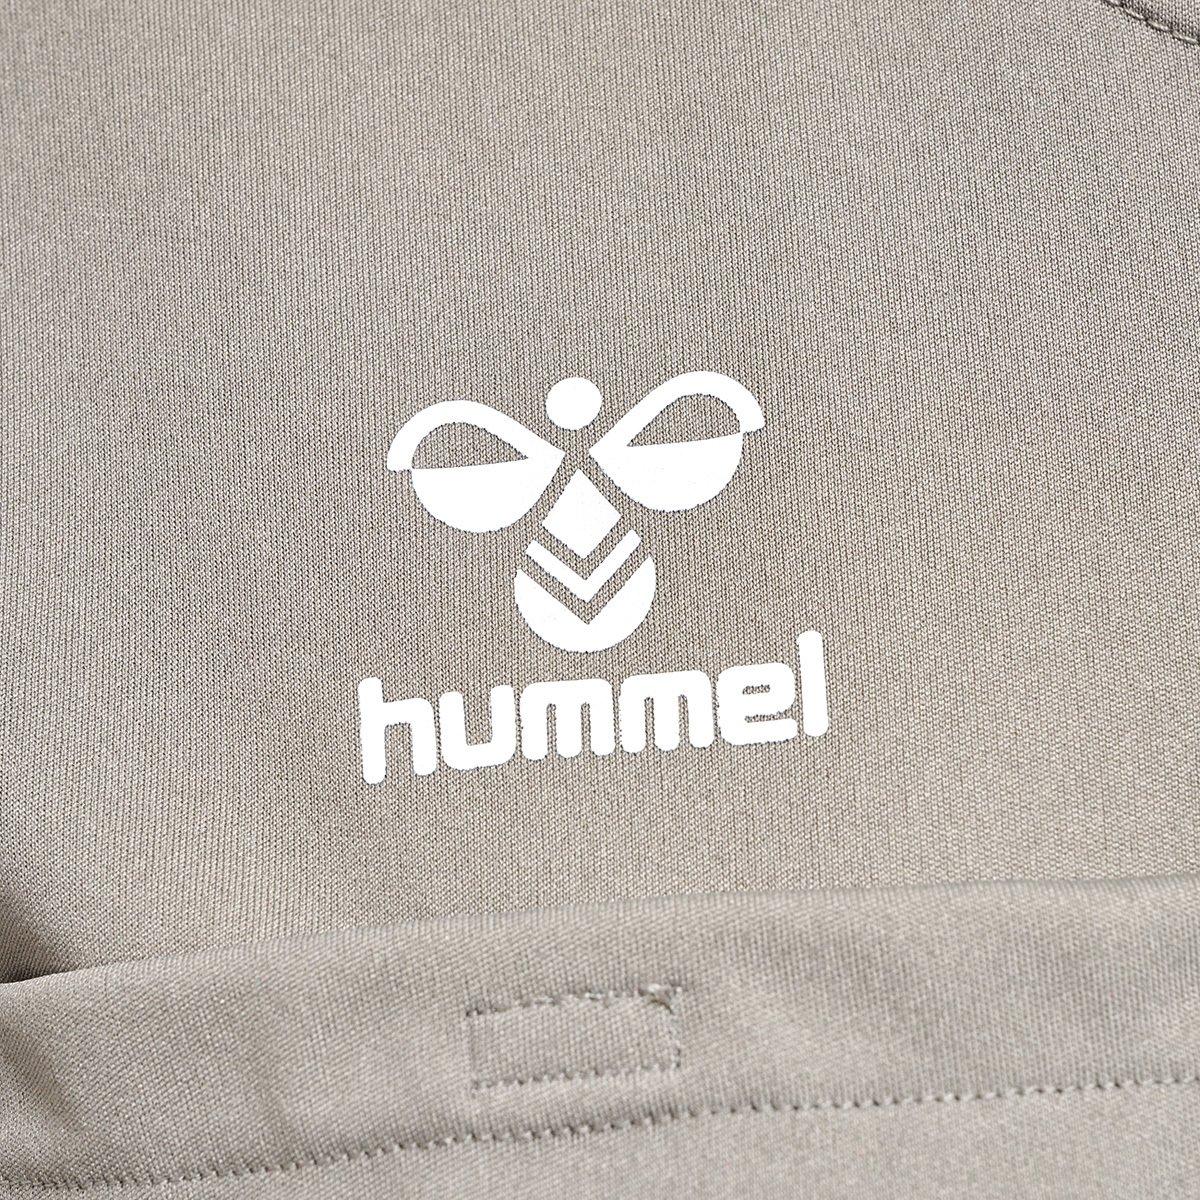 Hummel  -T-Shirt hml referee chevron 